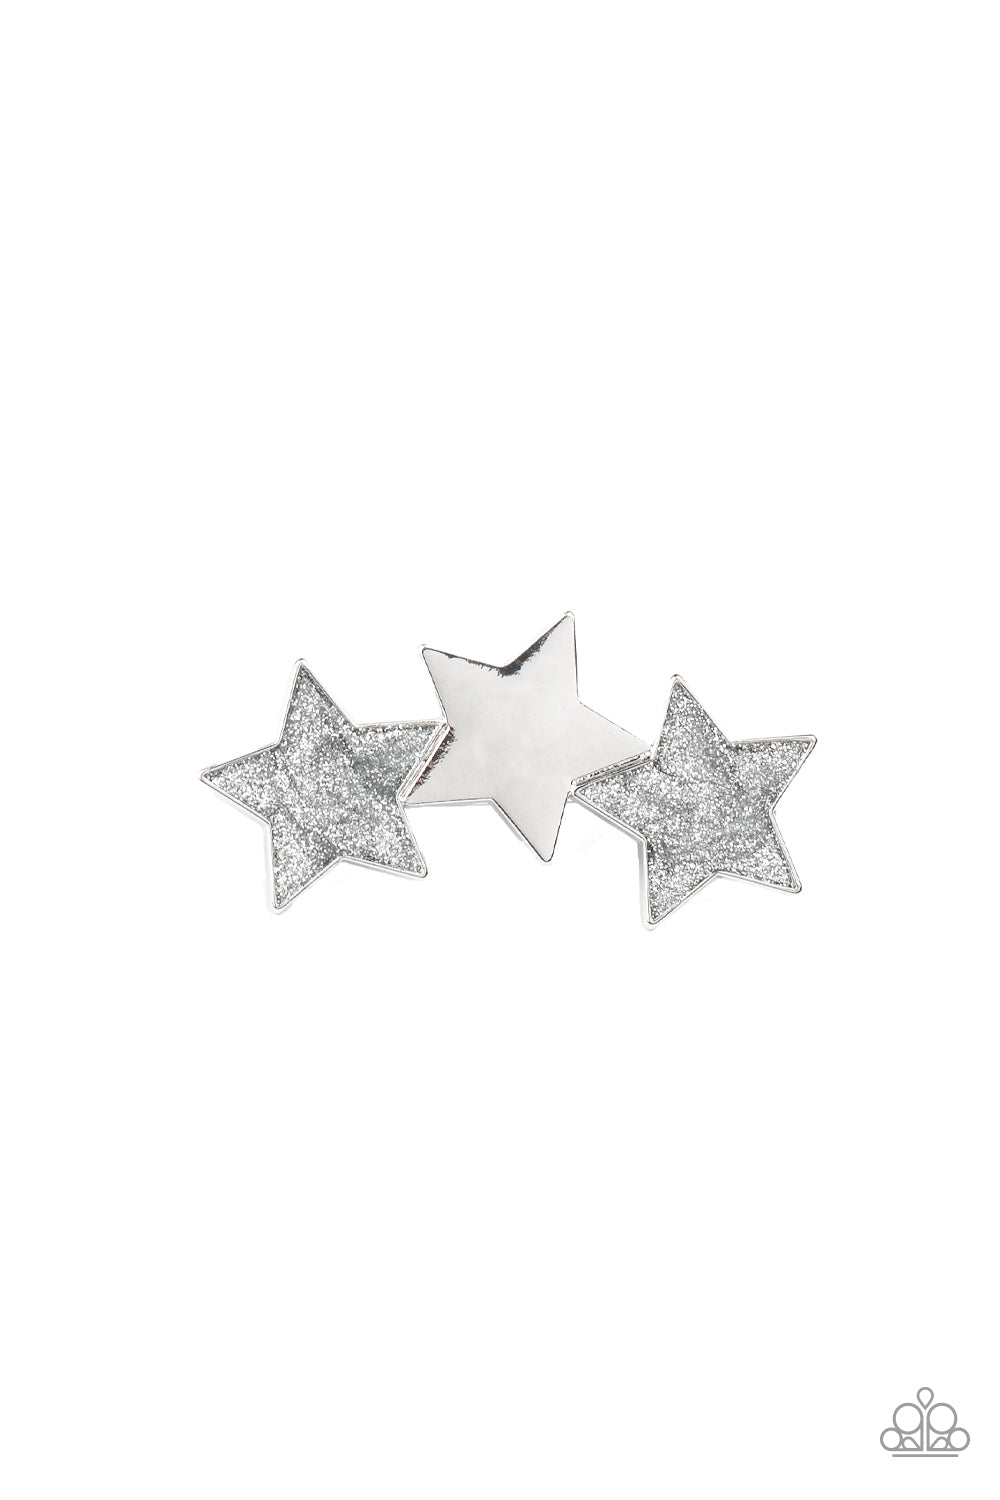 Don't Get Me STAR-ted!- Silver Star Hair Clip - Princess Glam Shop